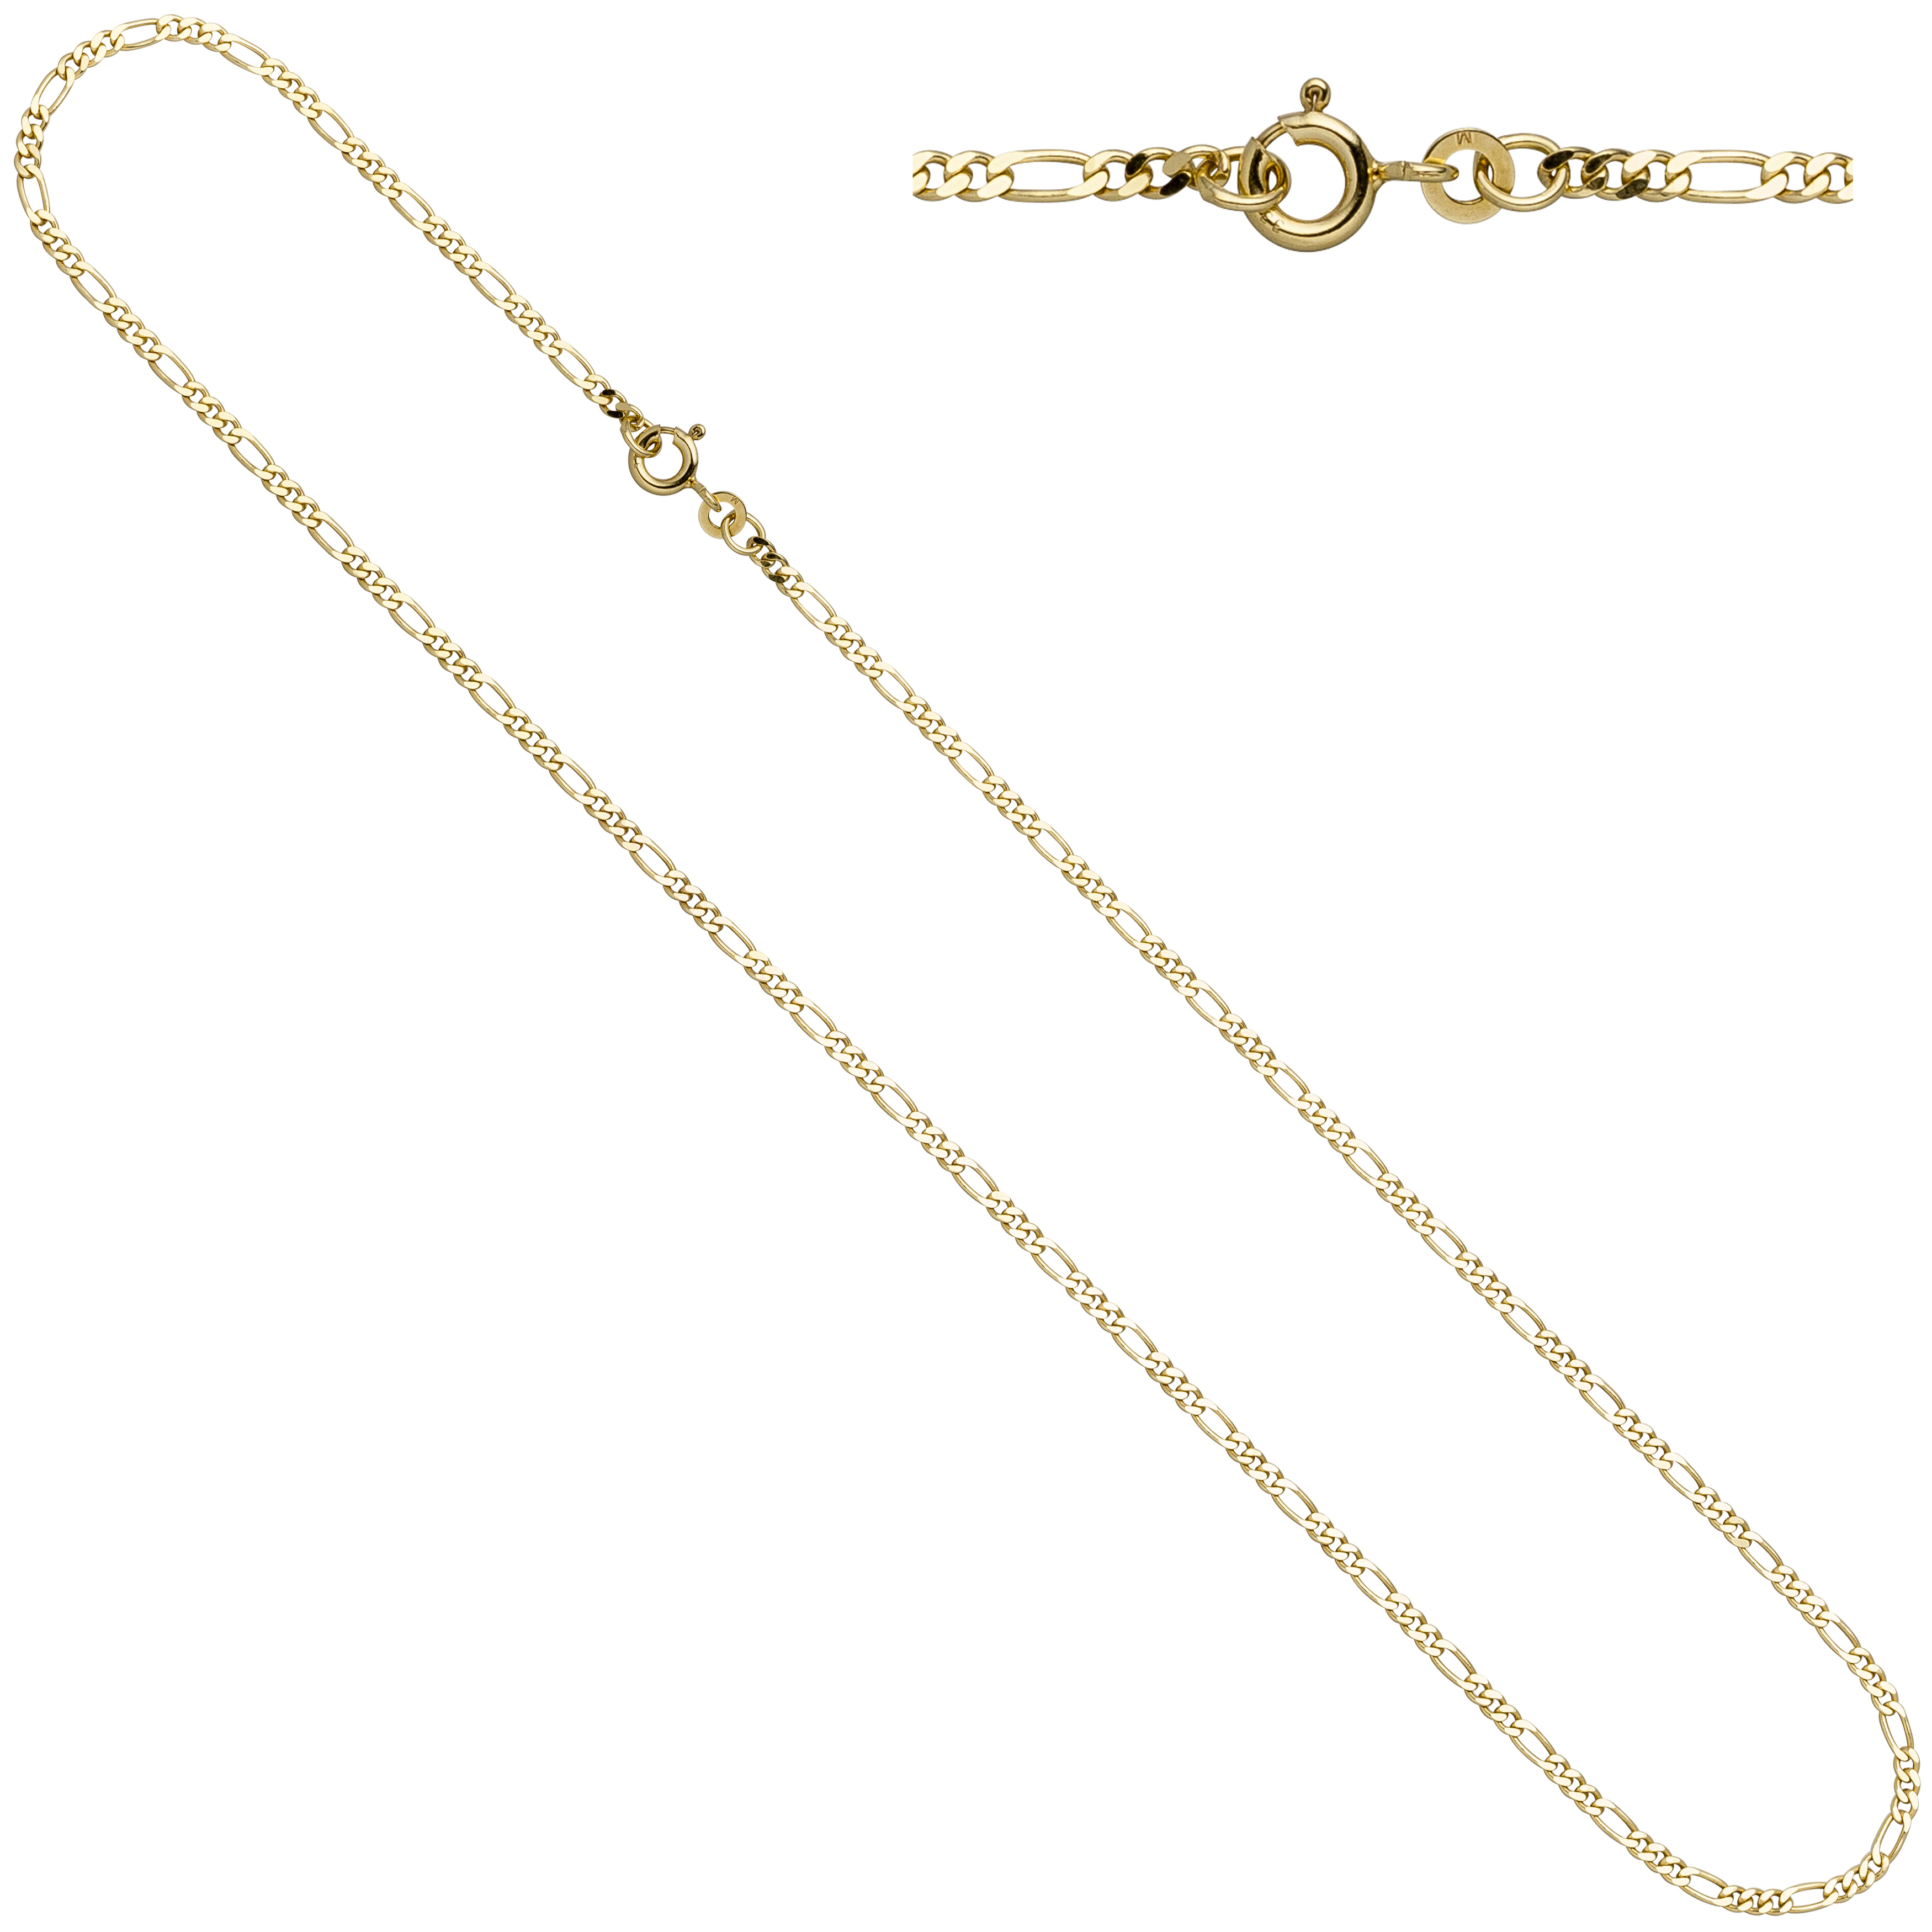 Figarokette 333 Gelbgold 2,3 mm 50 cm Gold Kette Halskette Federring